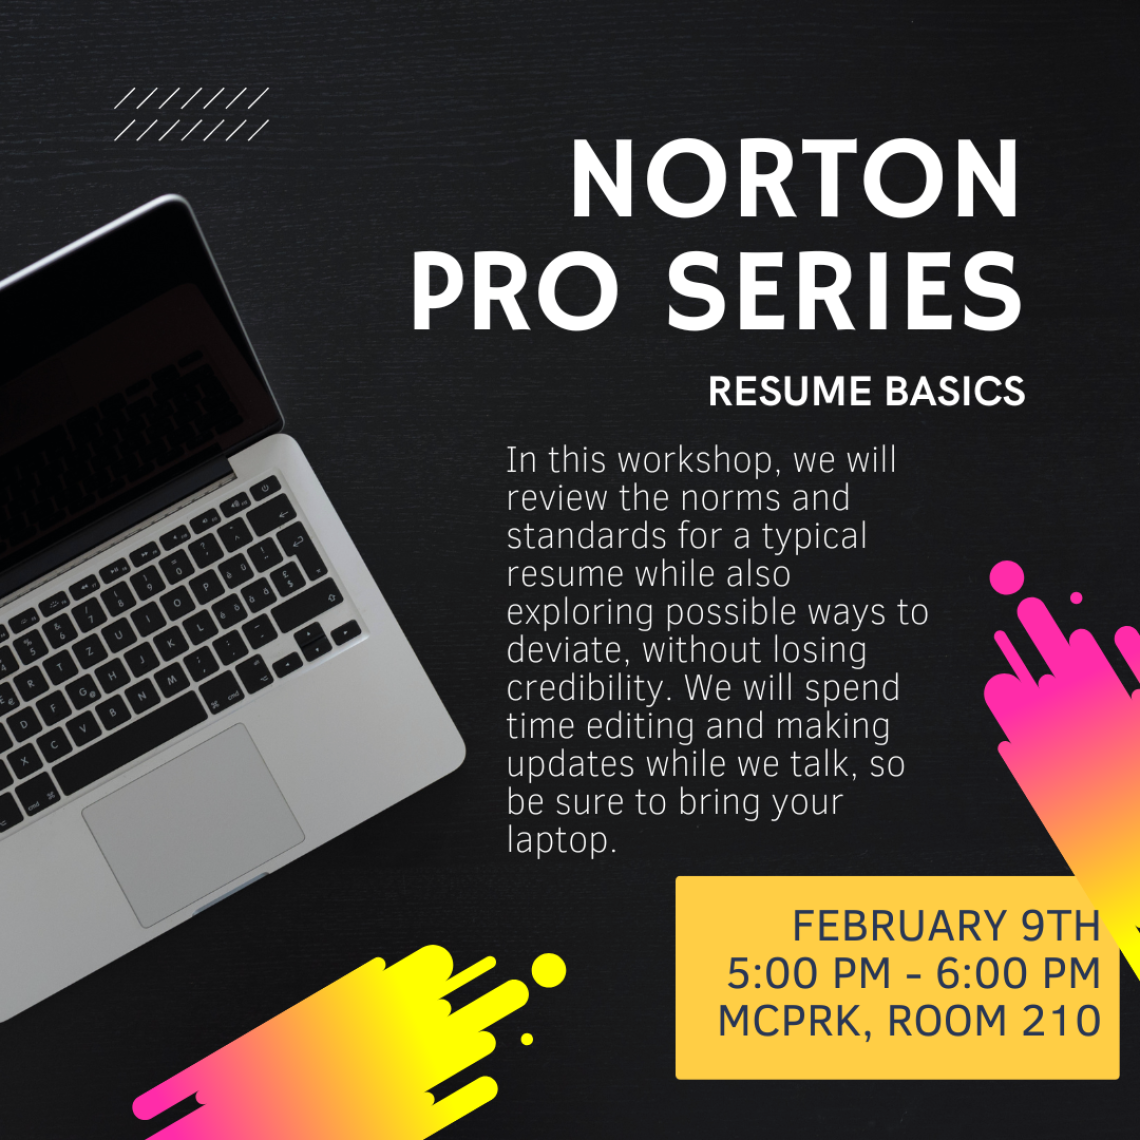 Norton Pro Series: Resume Basics, Session Description and Logistics